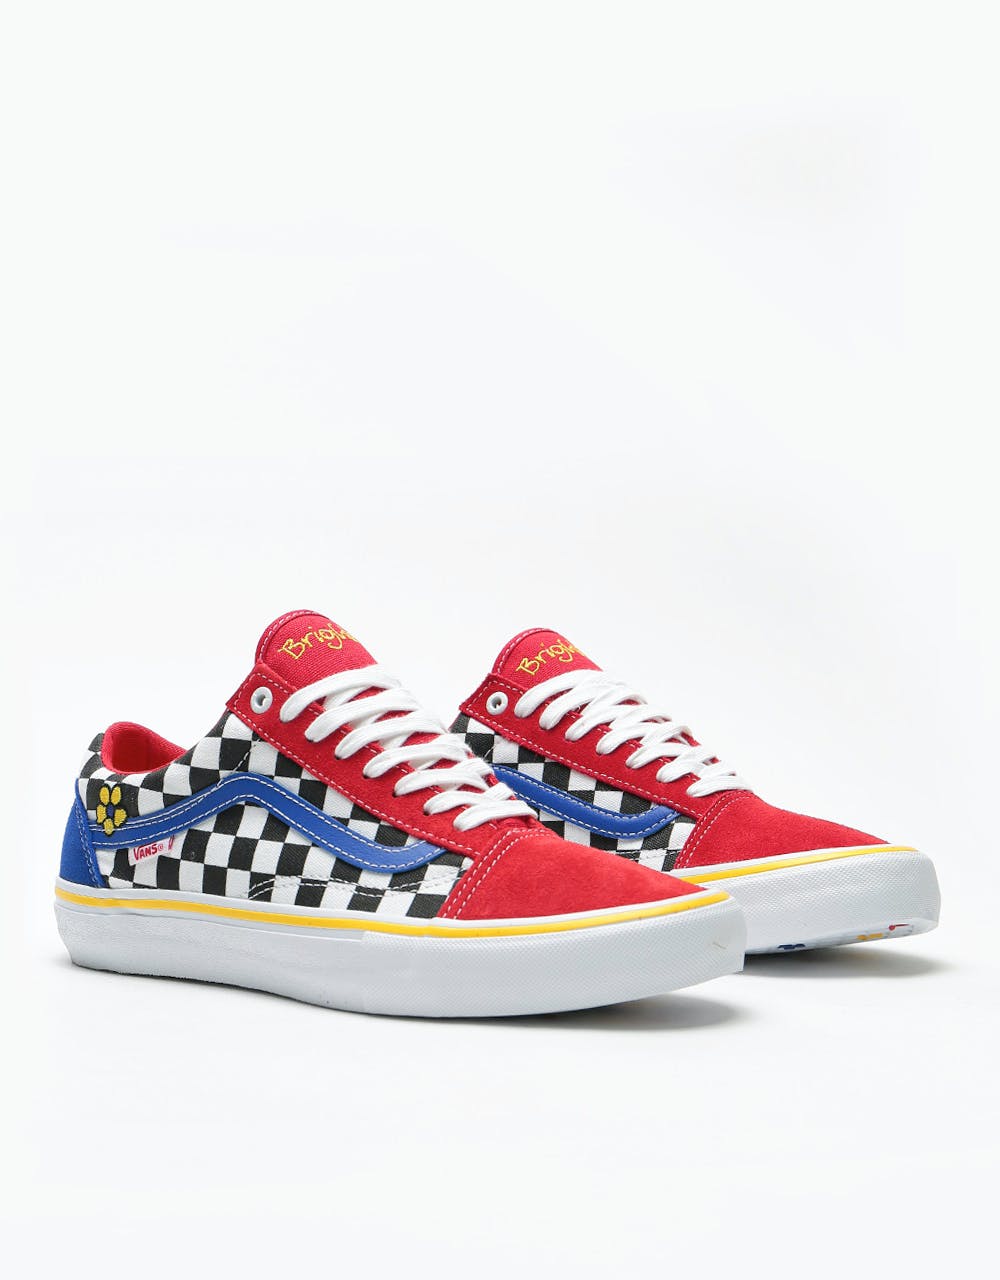 Vans Old Skool Pro Skate Shoes - (Brighton Zeuner) Red/Checker/Blue